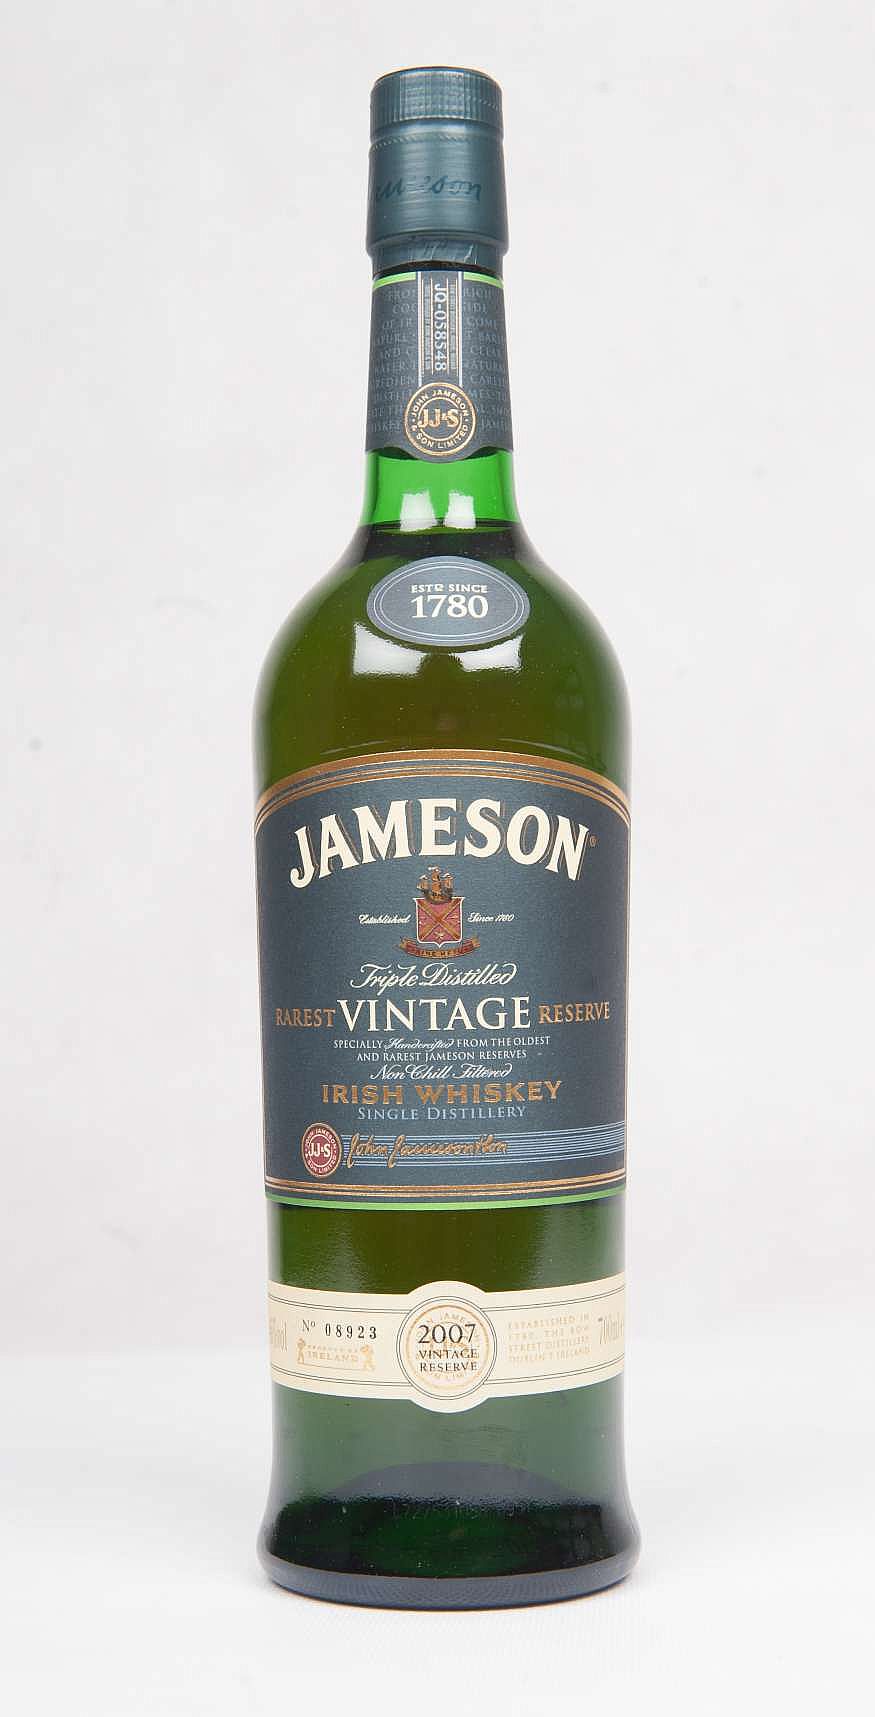 Jameson Rarest Vintage Reserve 2007